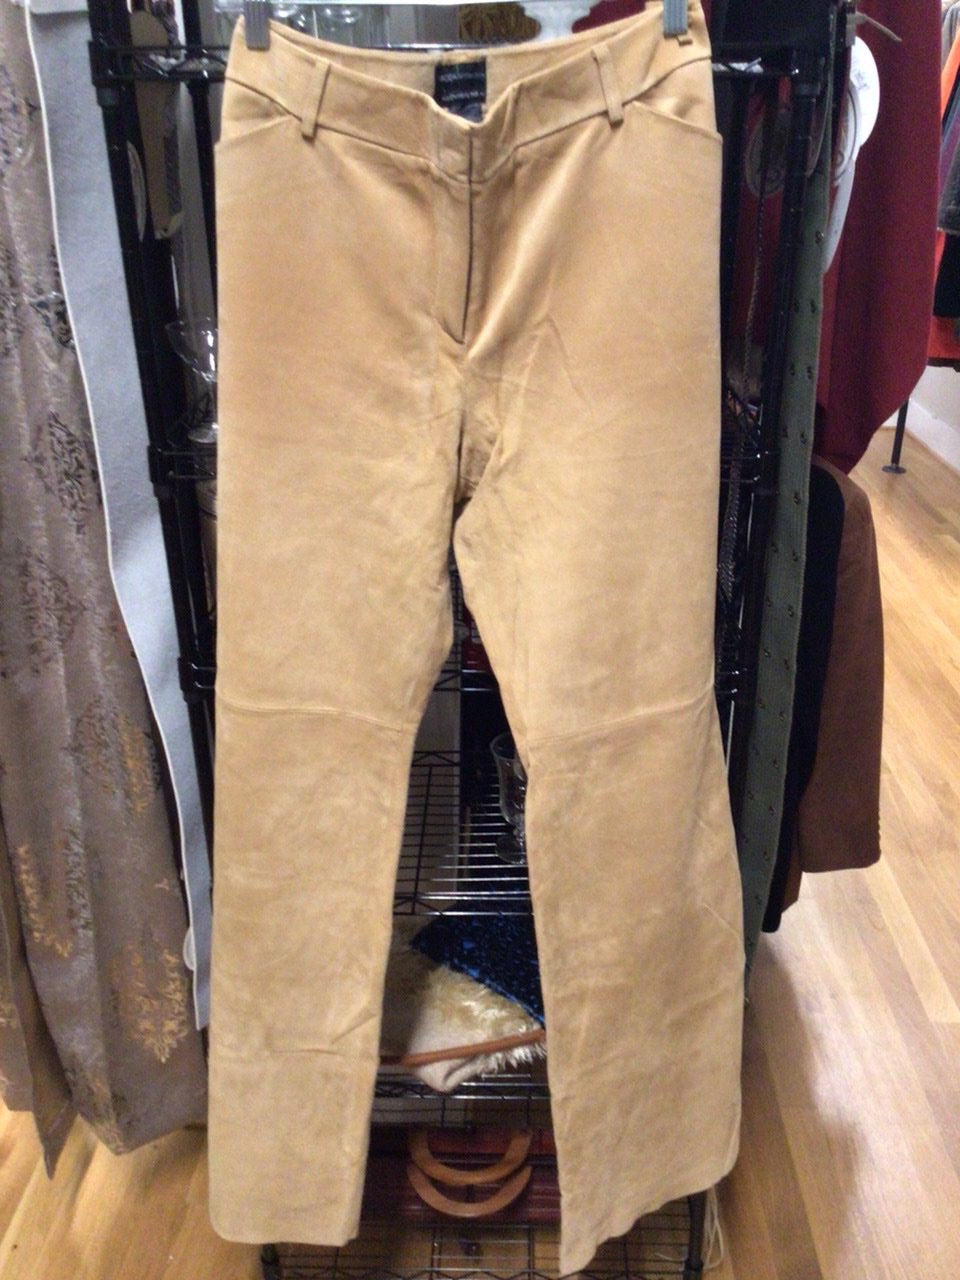 Genuine leather pants, size 16L  #1503